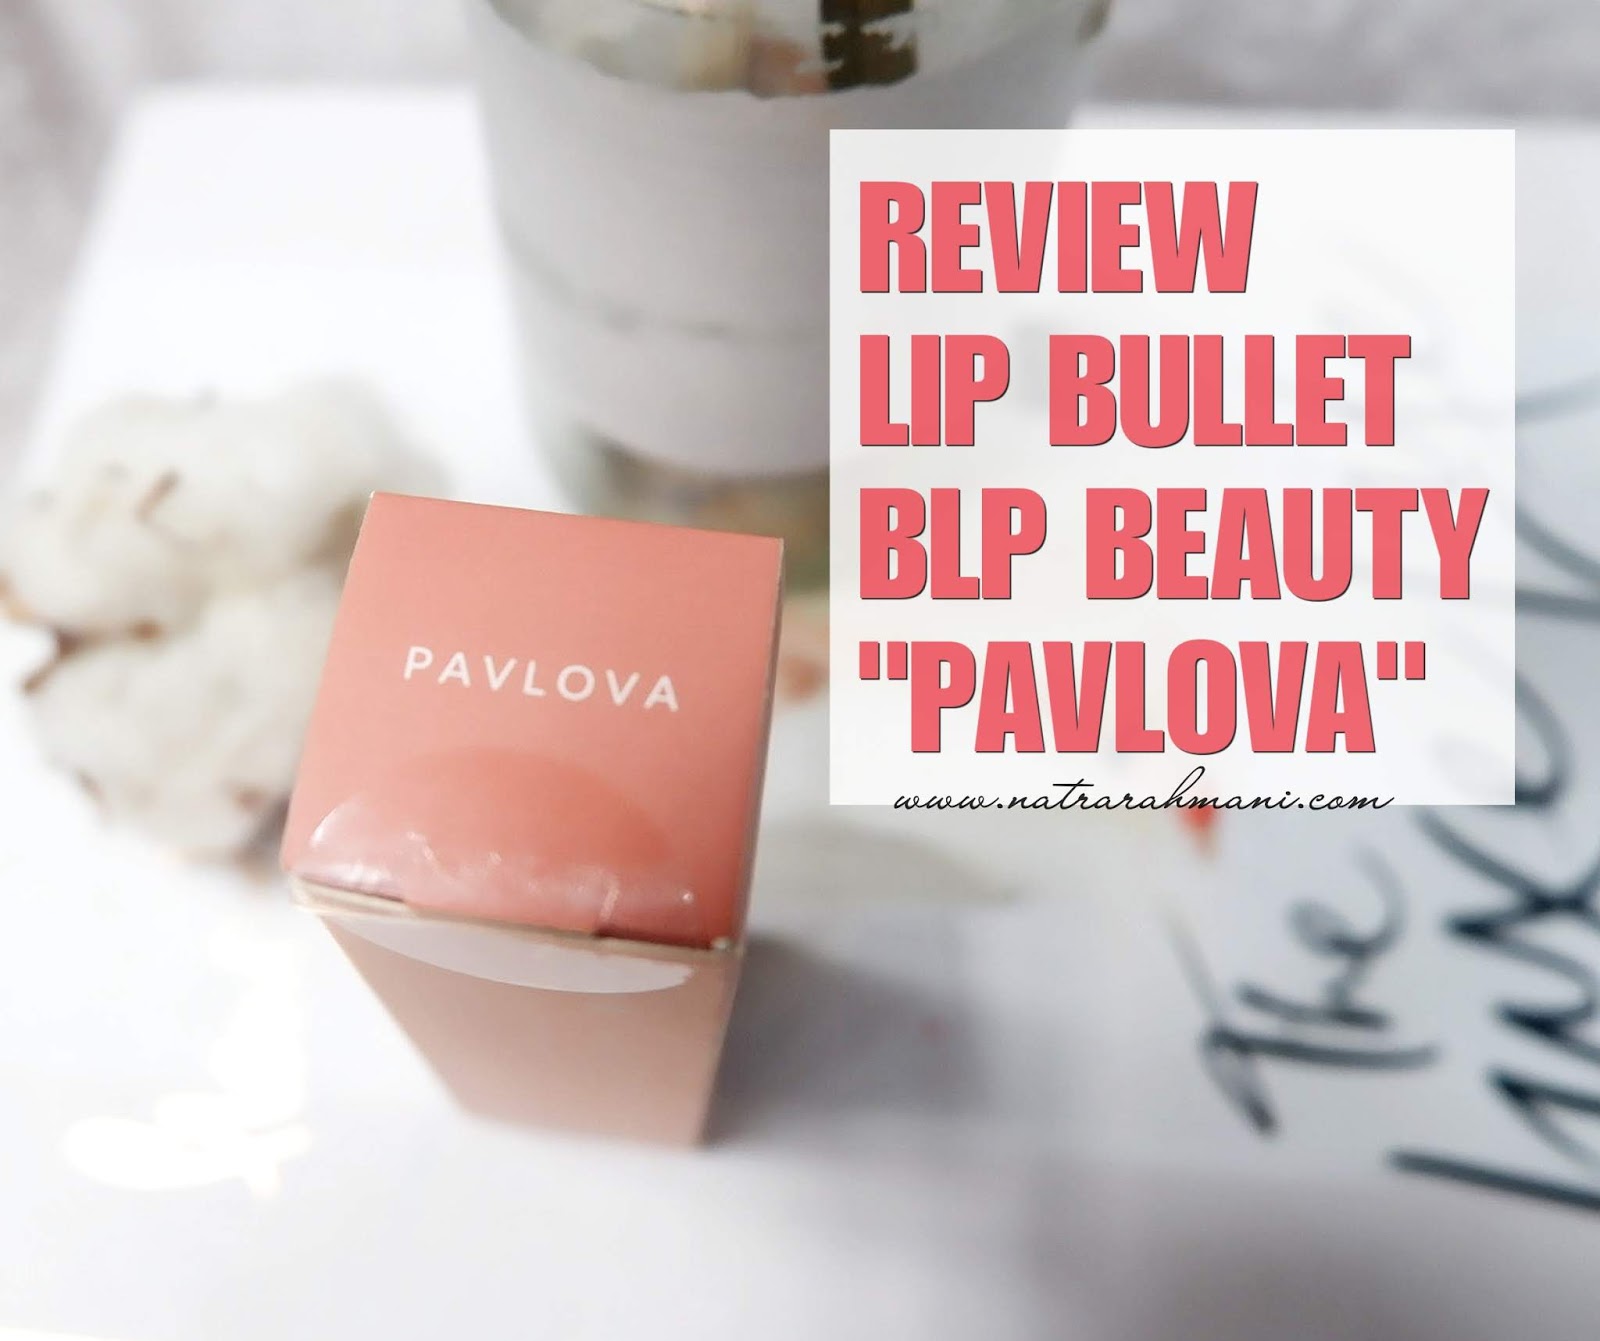 review-lip-bullet-blp-beauty-shade-pavlova